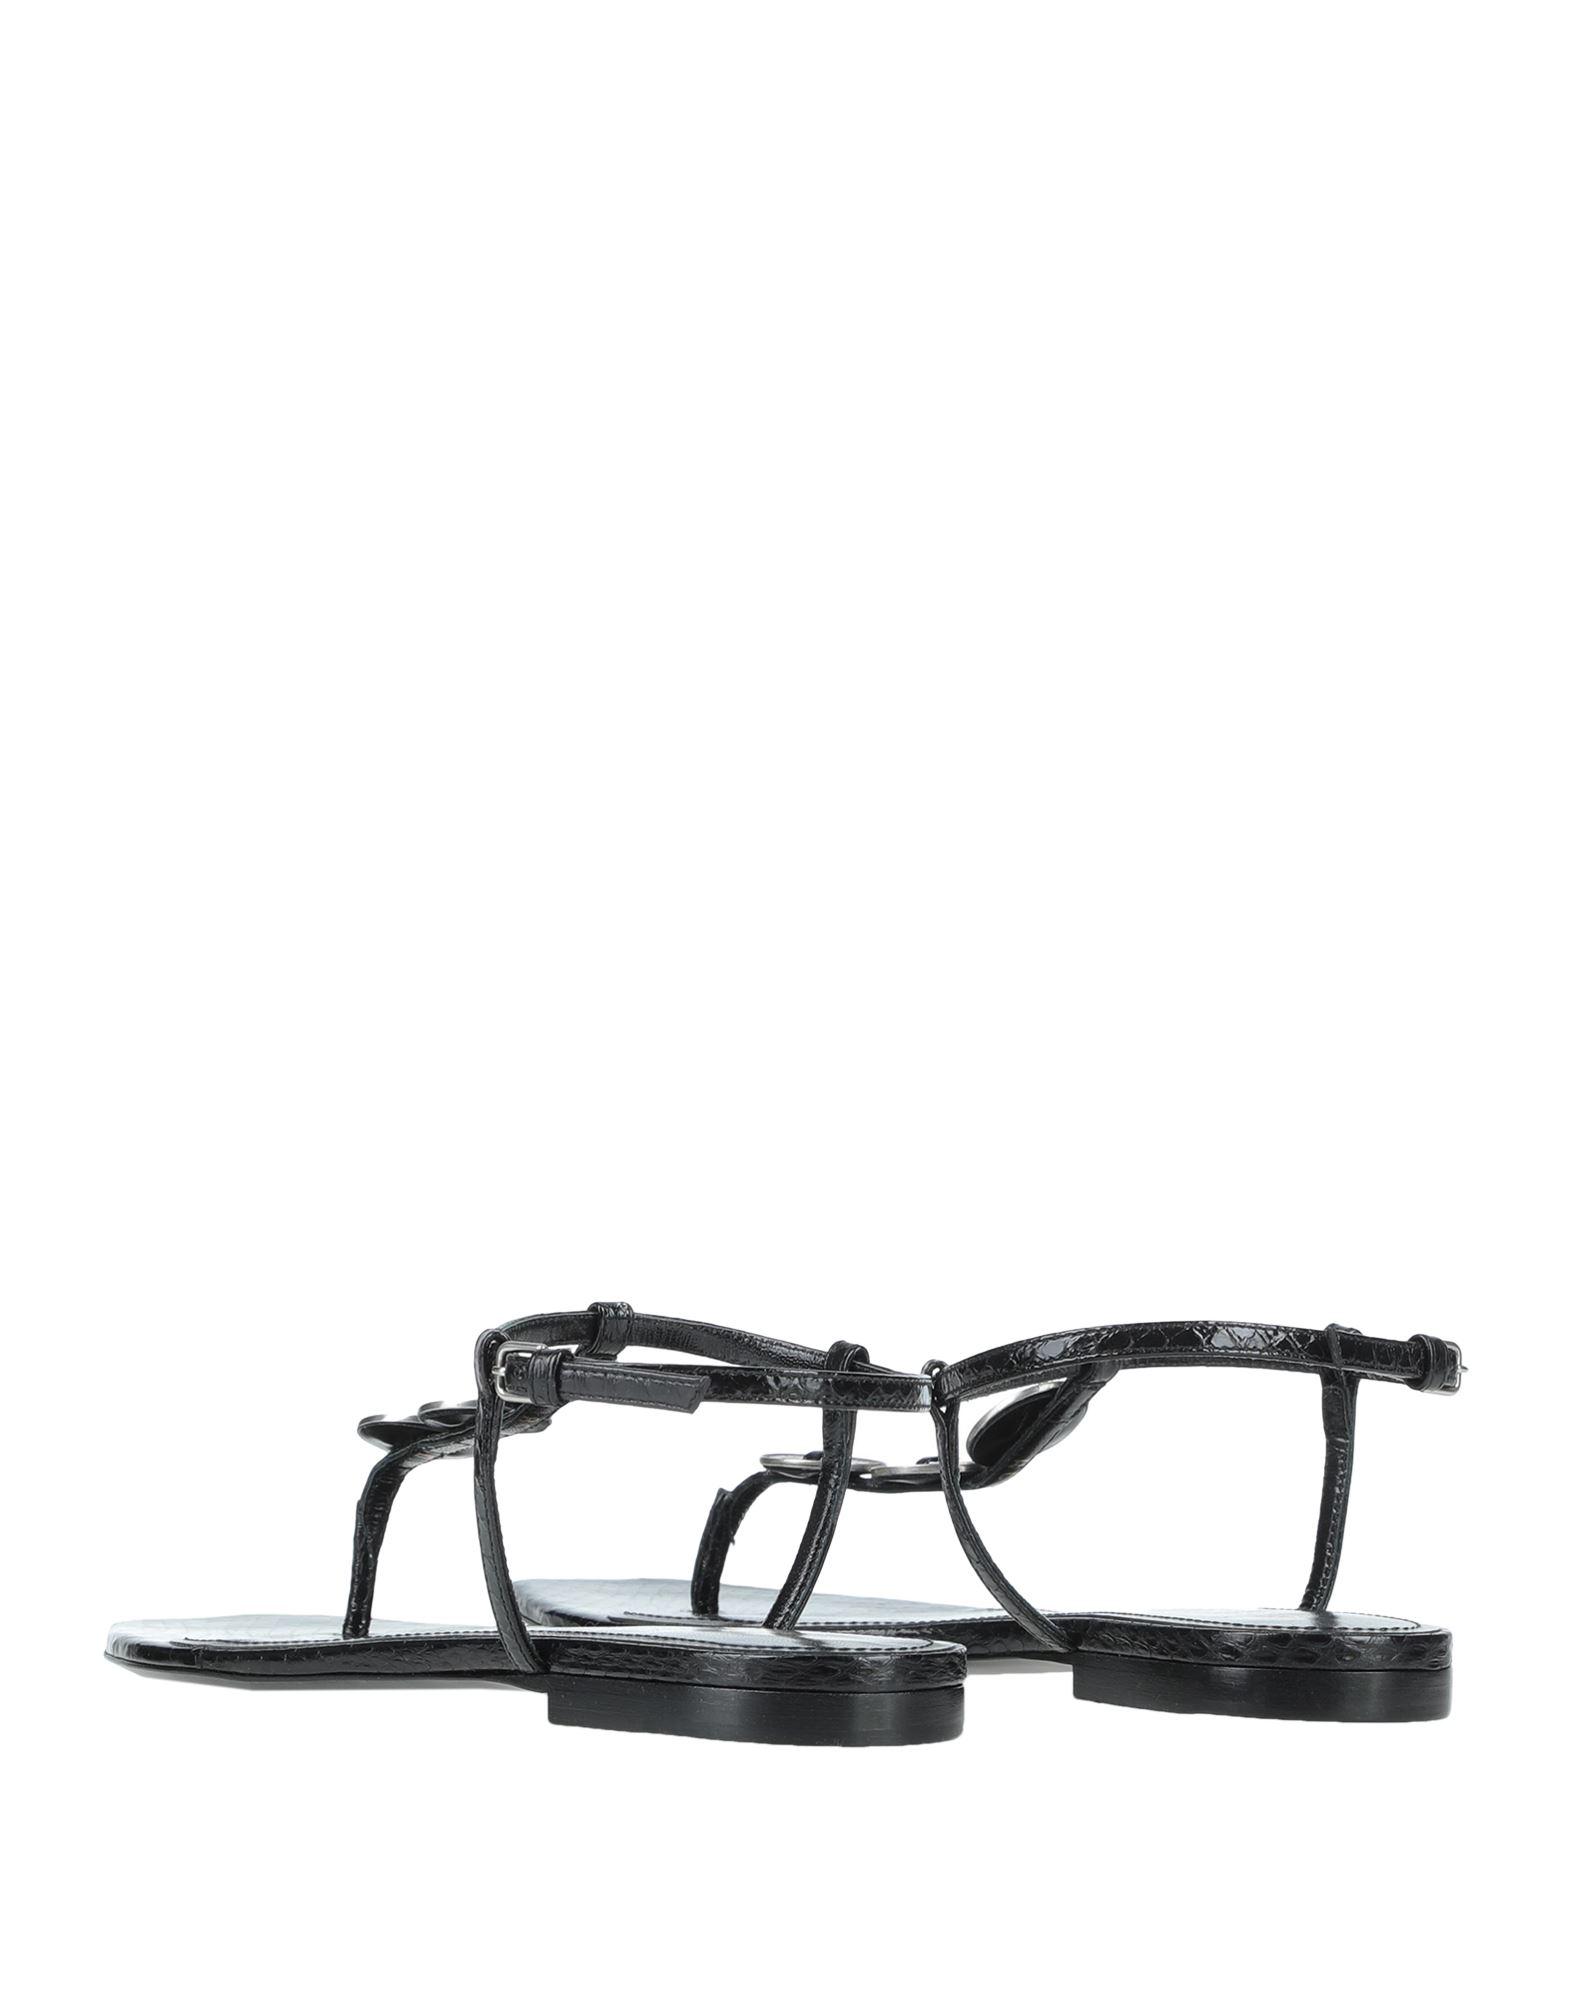 Saint Laurent Leather Toe Post Sandals in Black - Lyst